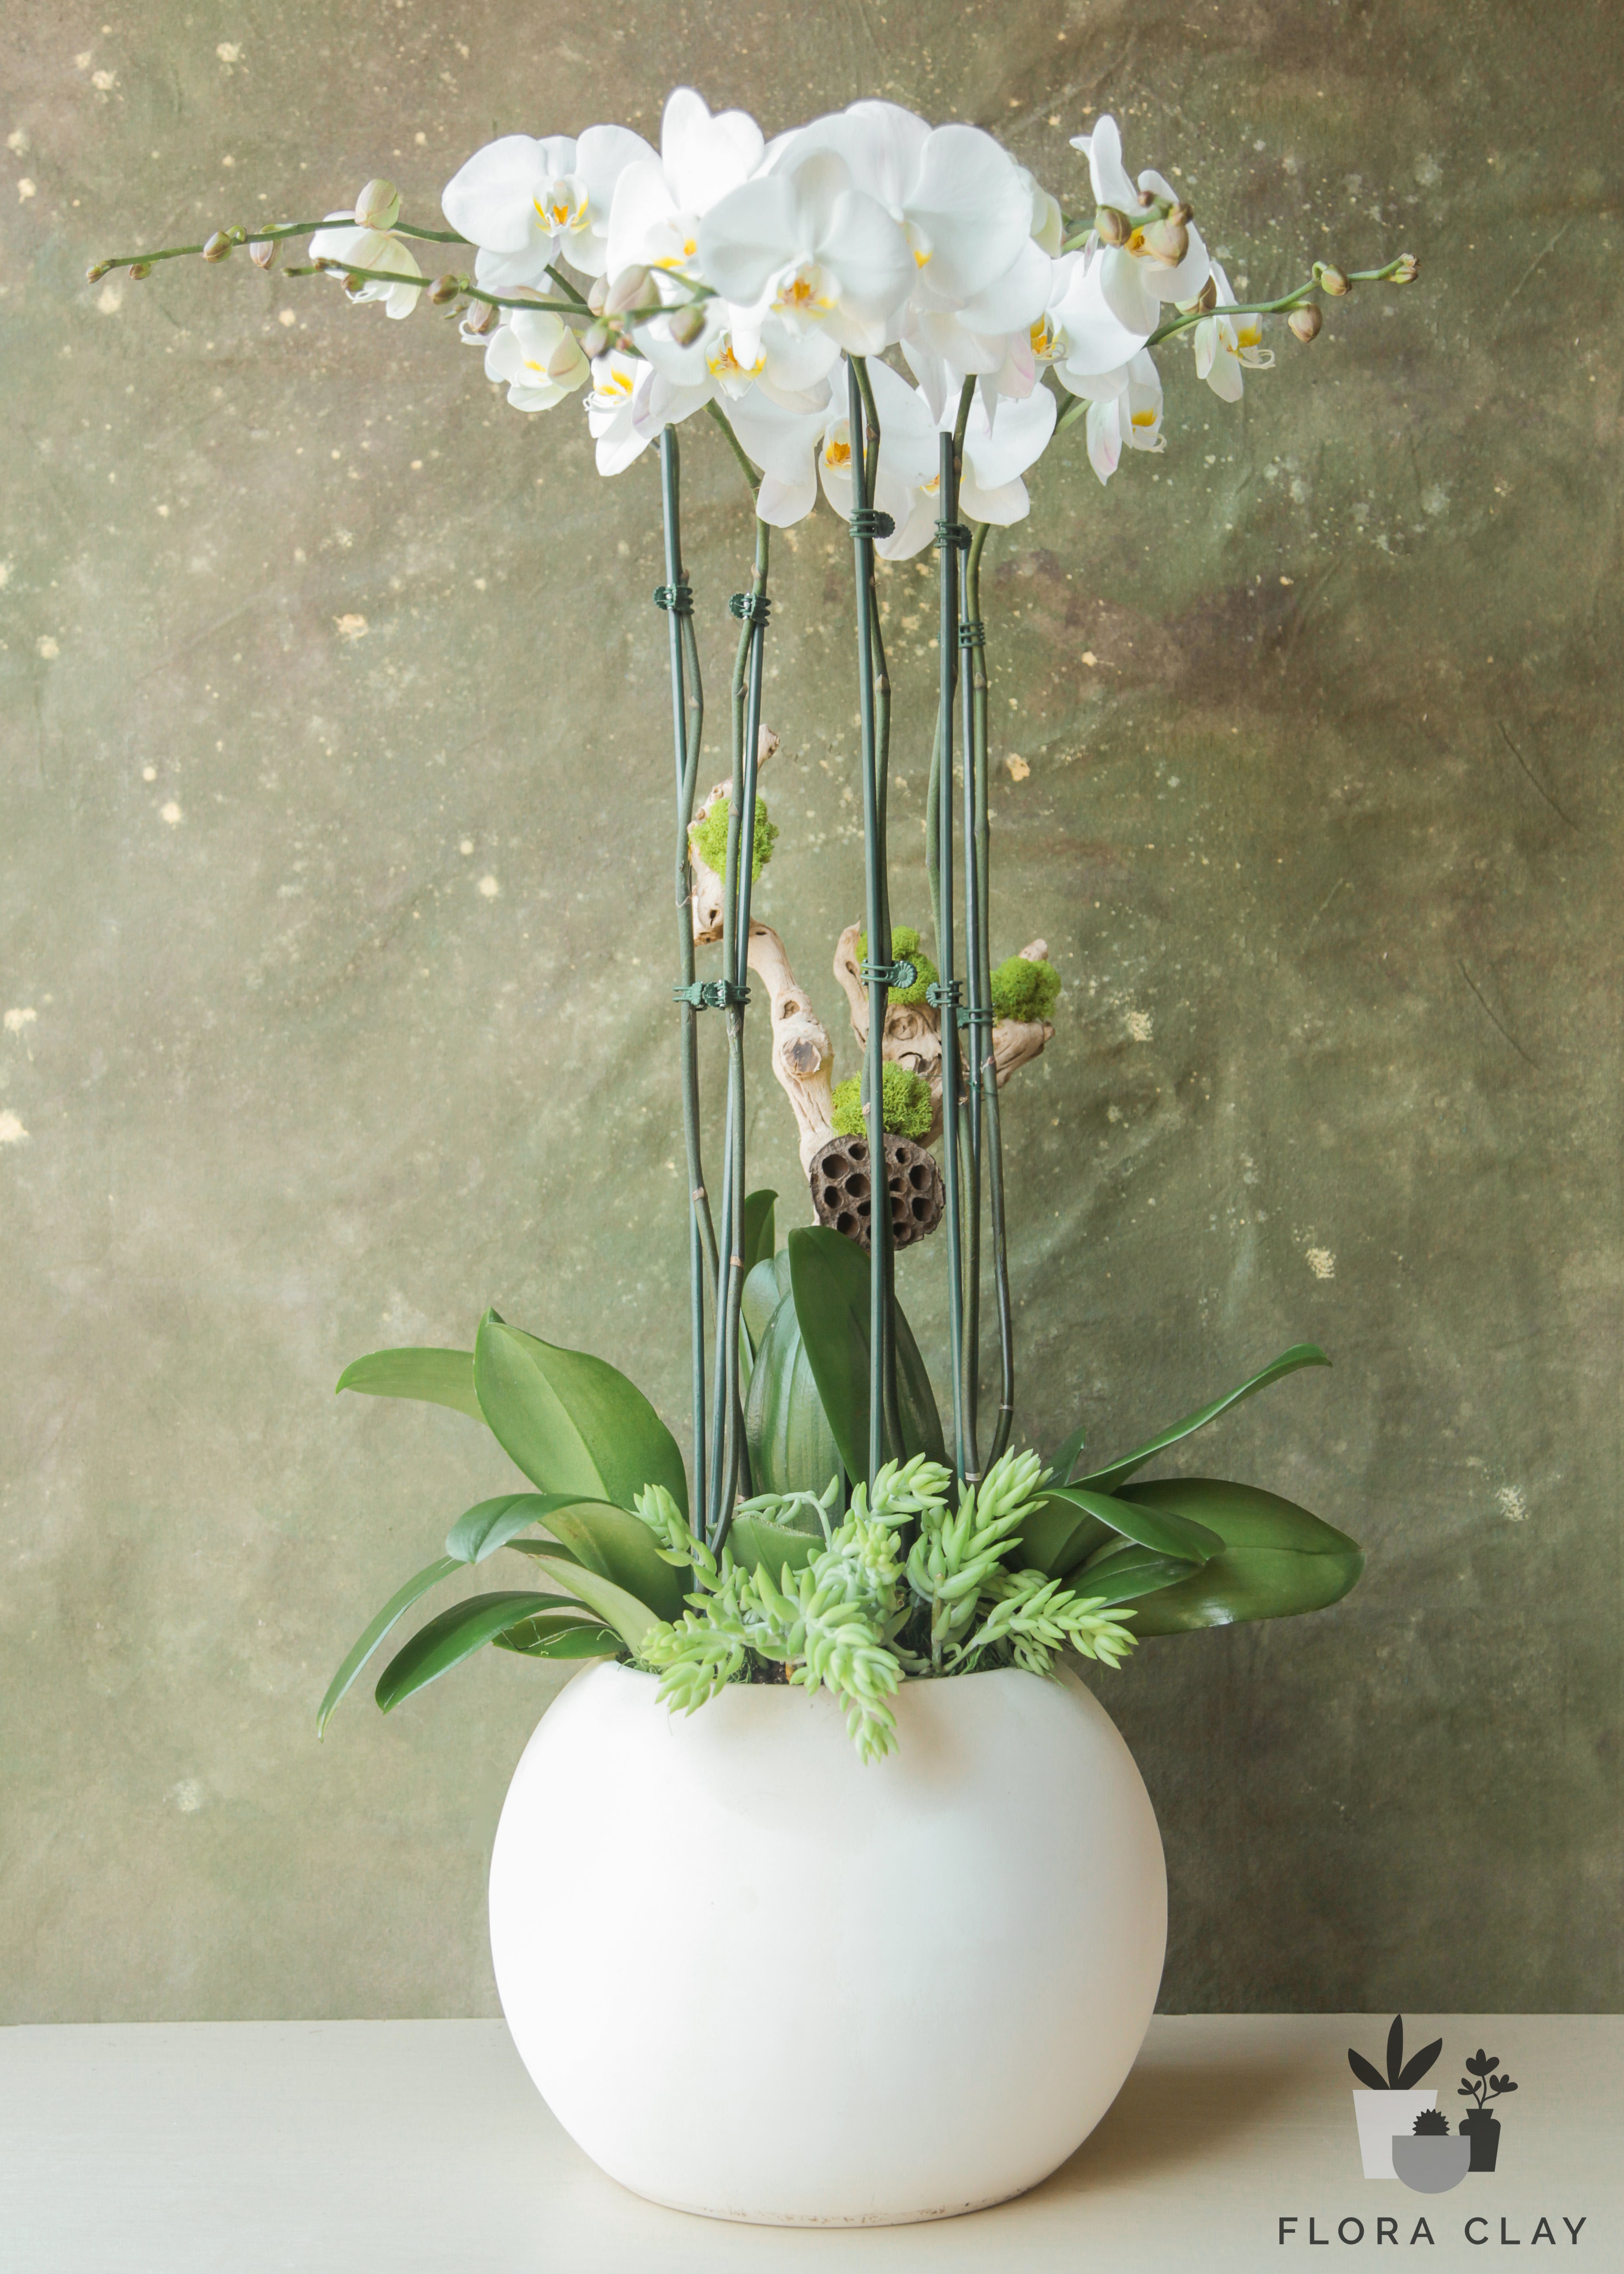 stardust-orchid-arrangement-floraclay-1.jpg